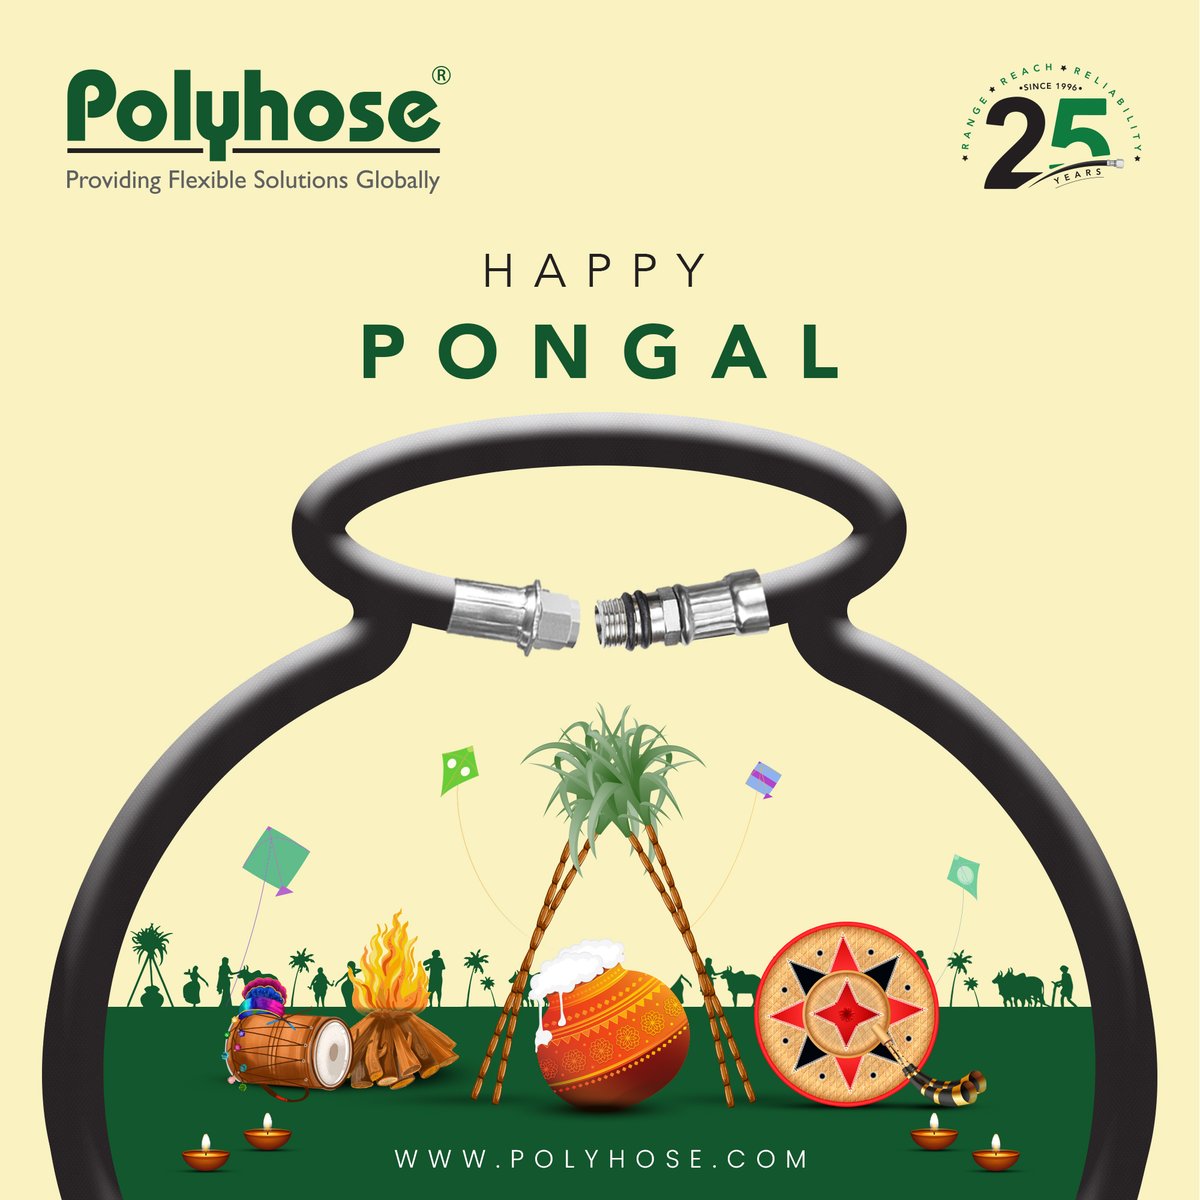 #Polyhose extends warm wishes to everyone on the joyous occasions of #Pongal, #MakarSankranti, #Lohri, #BhogaliBihu, #Uttarayan, and #PaushParva! 🌾🌟

May the spirit of unity and abundance bring prosperity and happiness to all.
#FestiveGreetings #Prosperity #UnityInCelebration